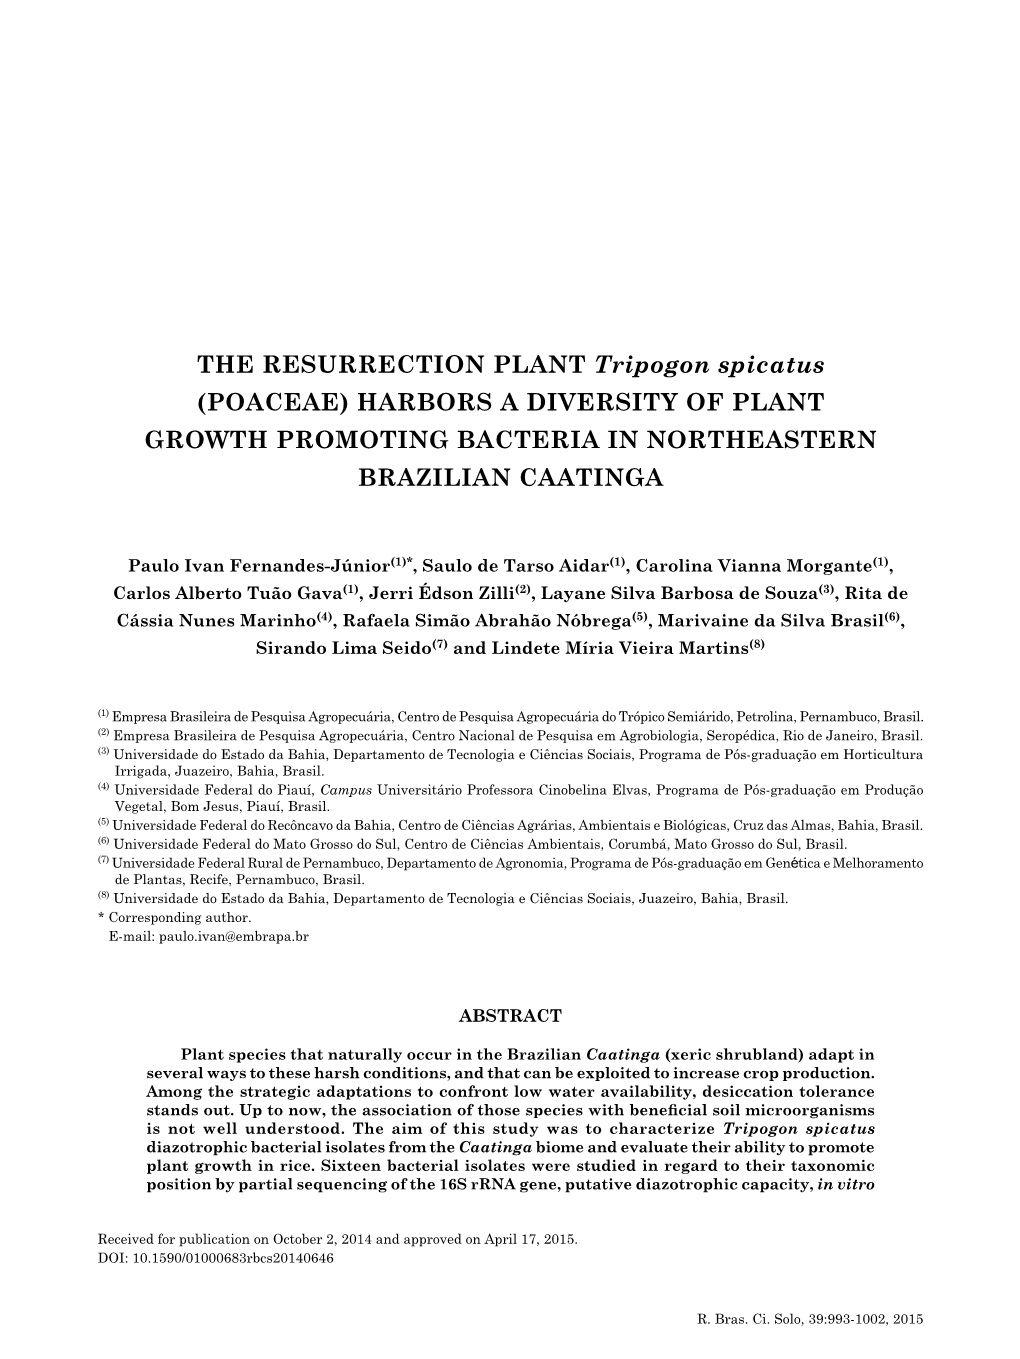 The Resurrection Plant Tripogon Spicatus (Poaceae) Harbors a Diversity of Plant Growth Promoting Bacteria in Northeastern Brazilian Caatinga